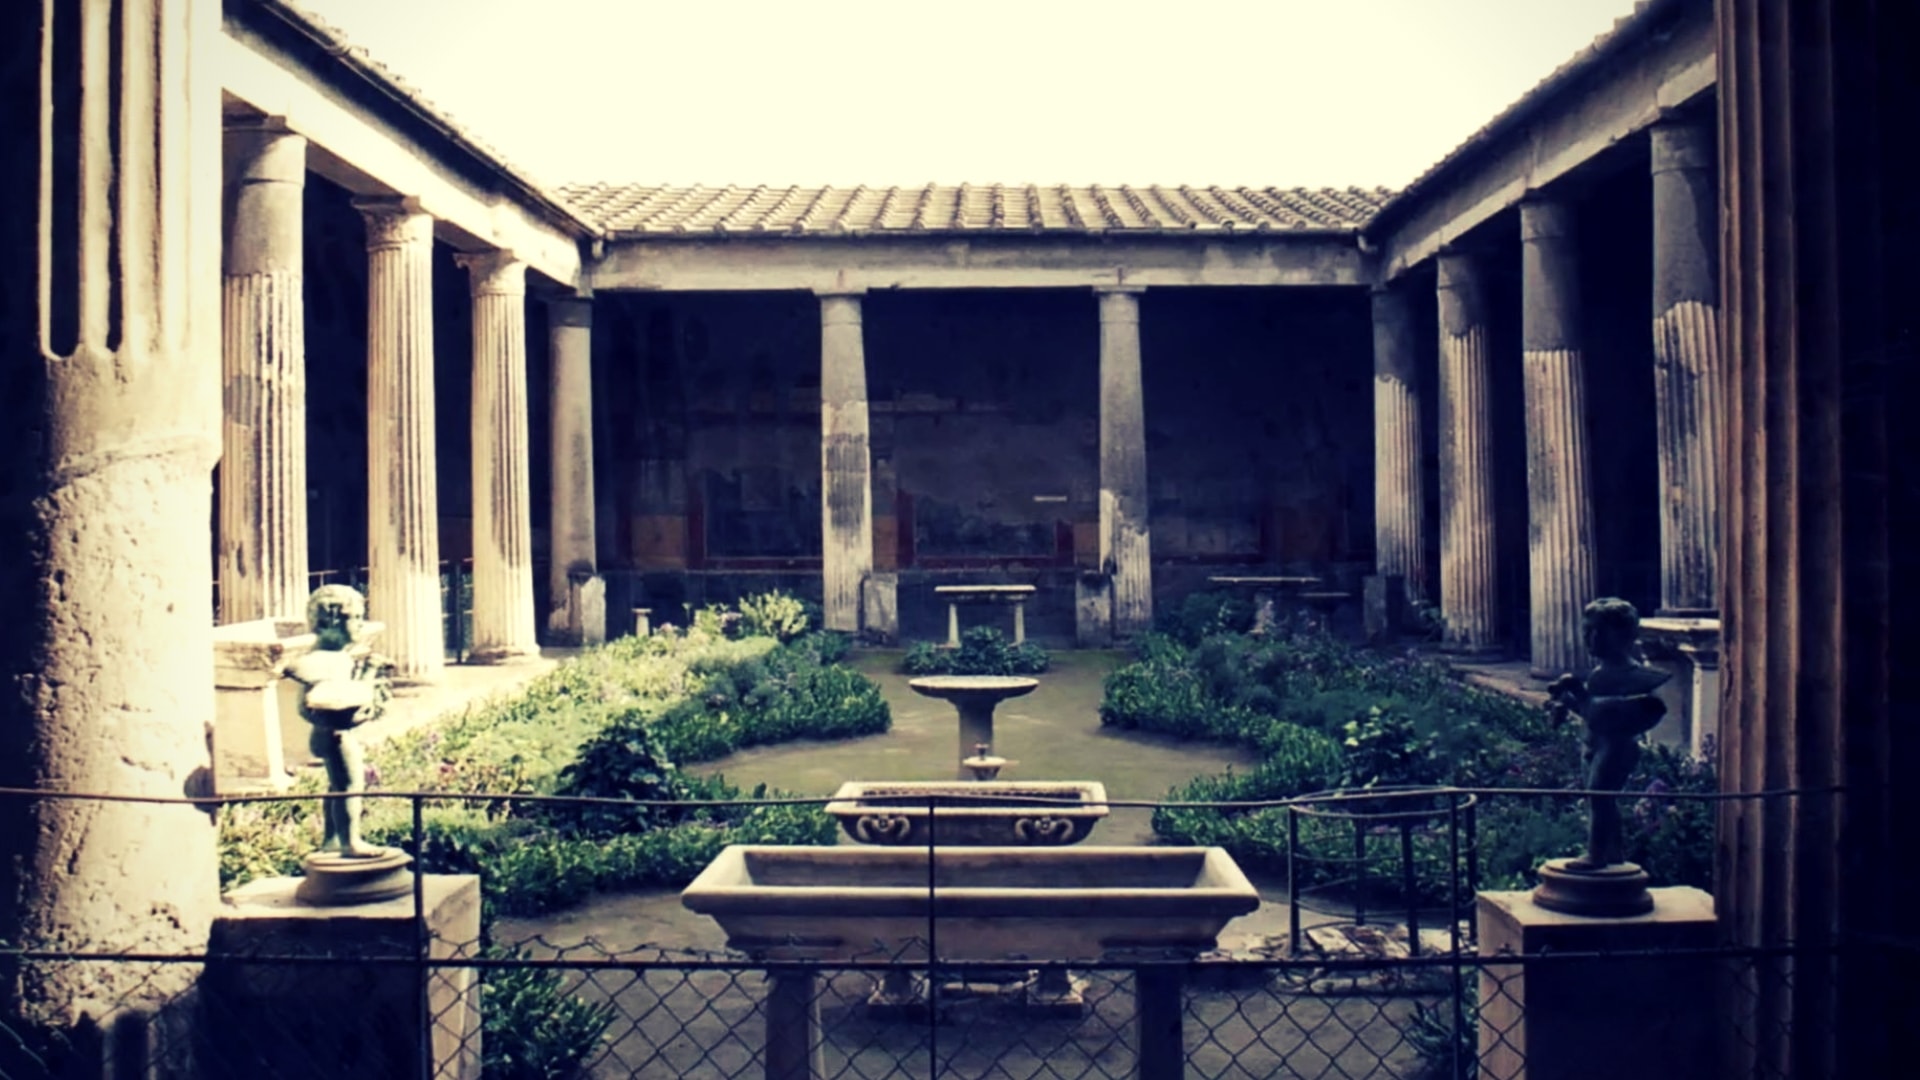 The houses of Pompeii